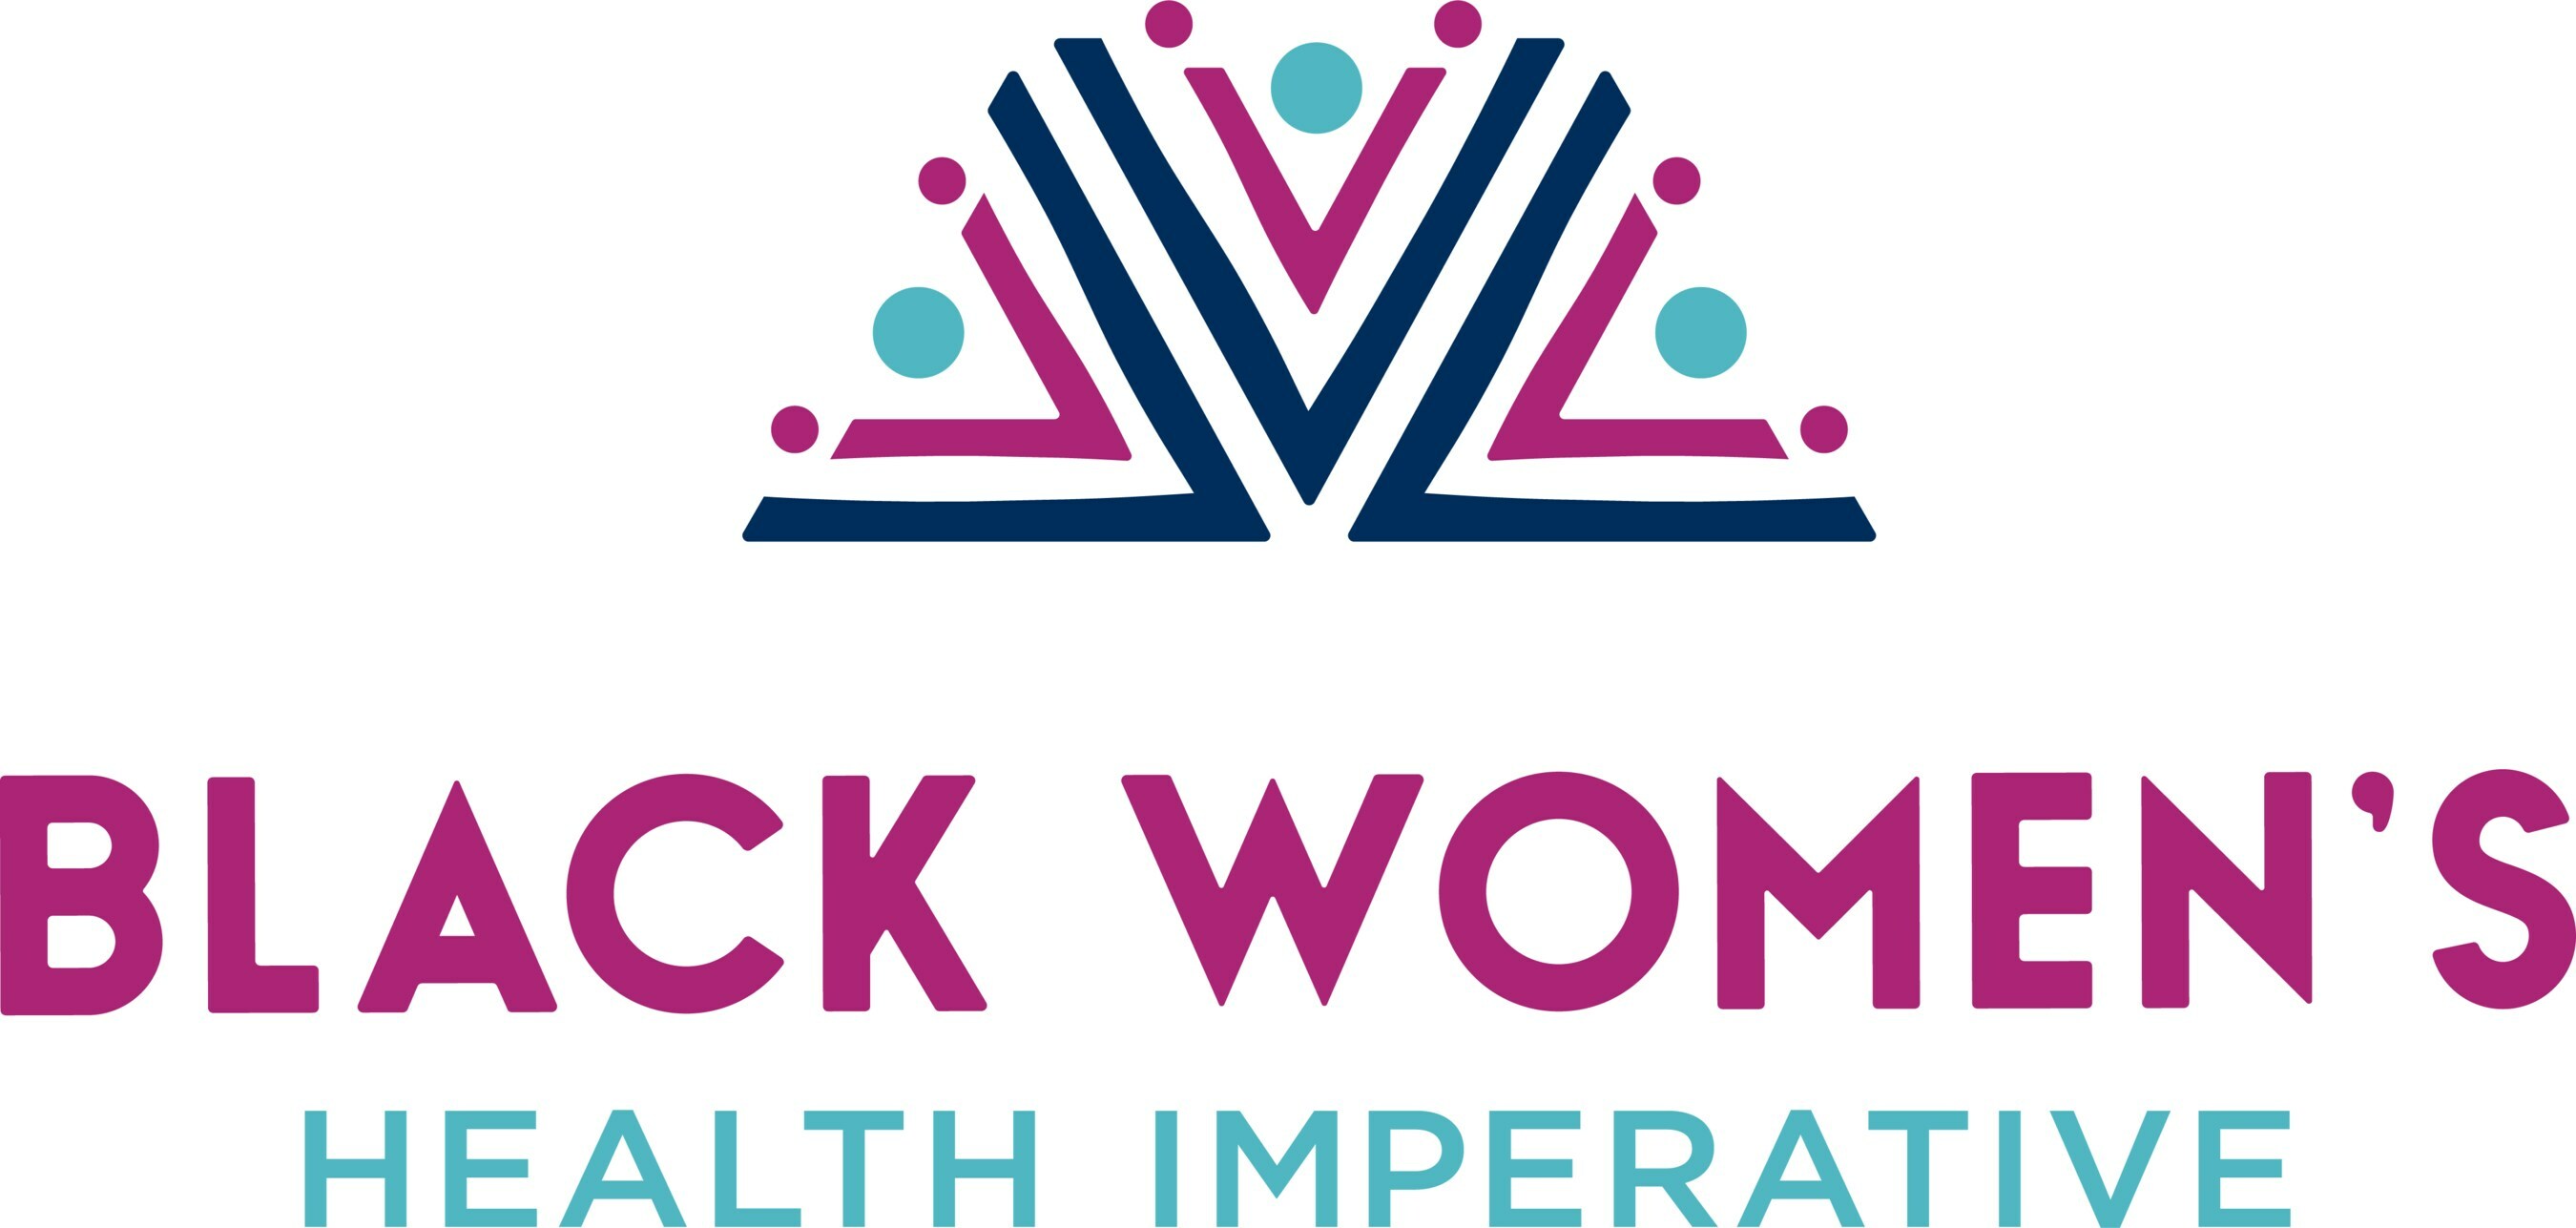 Black Women's Health Imperative (PRNewsfoto/Black Women's Health Imperative)